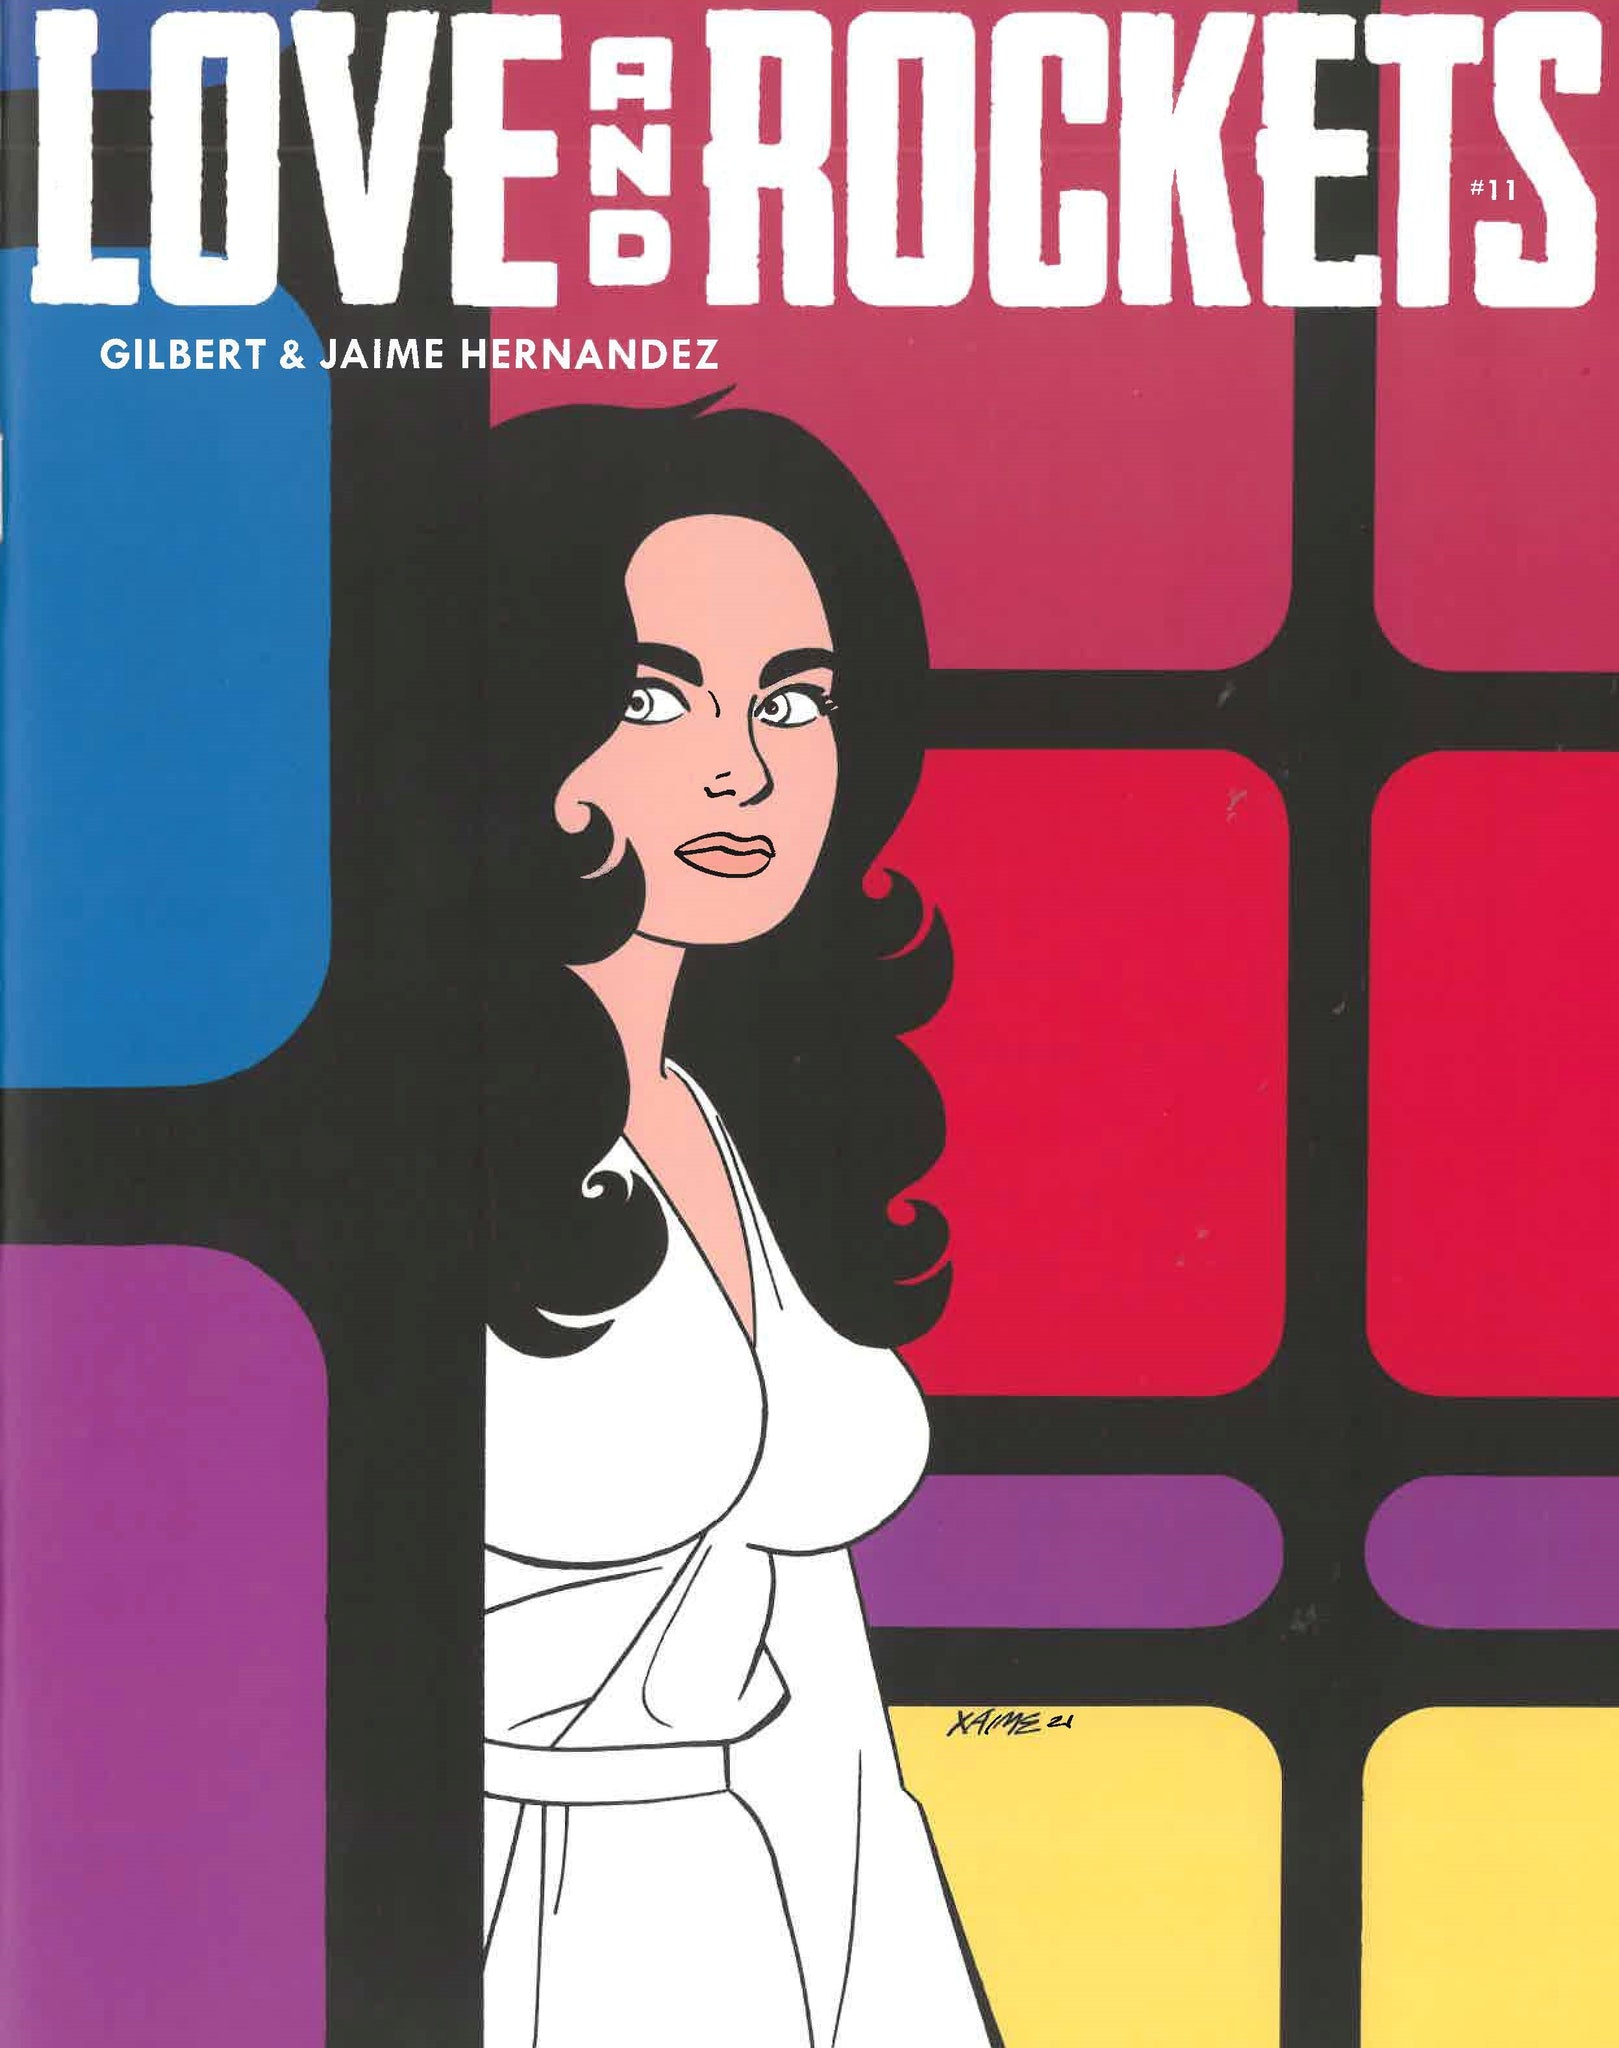 Love and Rockets #11 by Gilbert & Jaime Hernandez